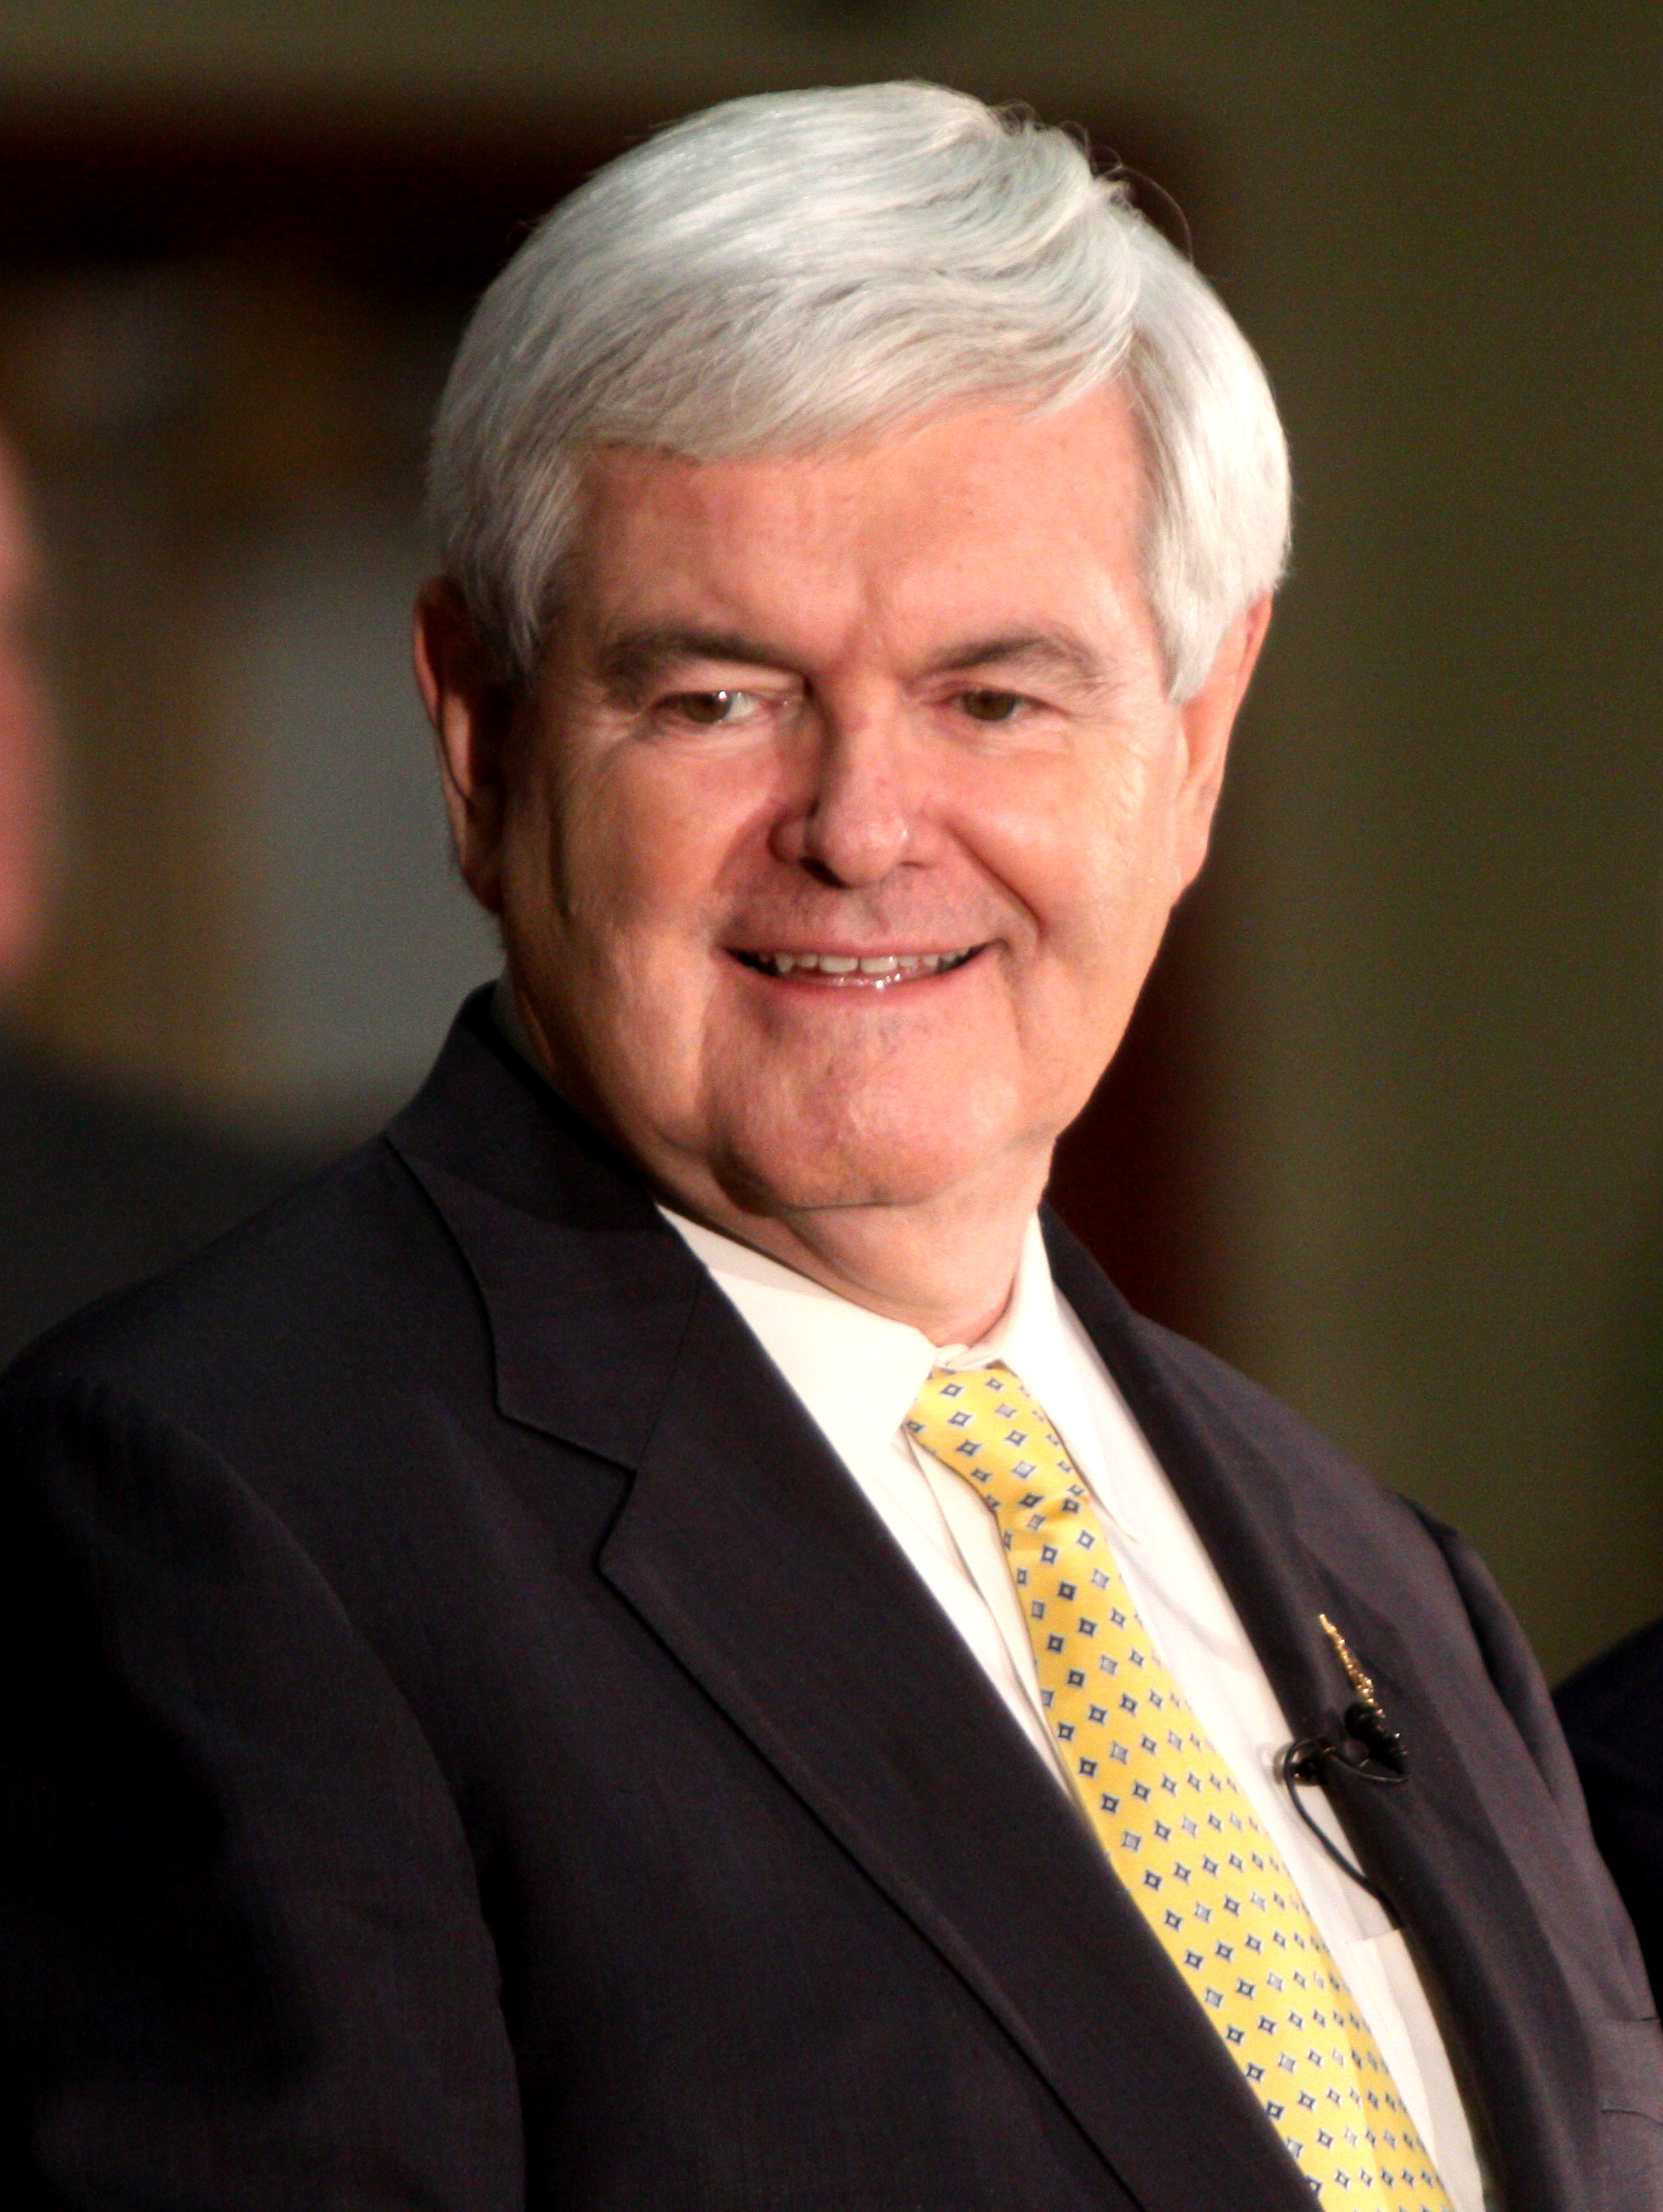 Newt Gingrich wearing a black suit